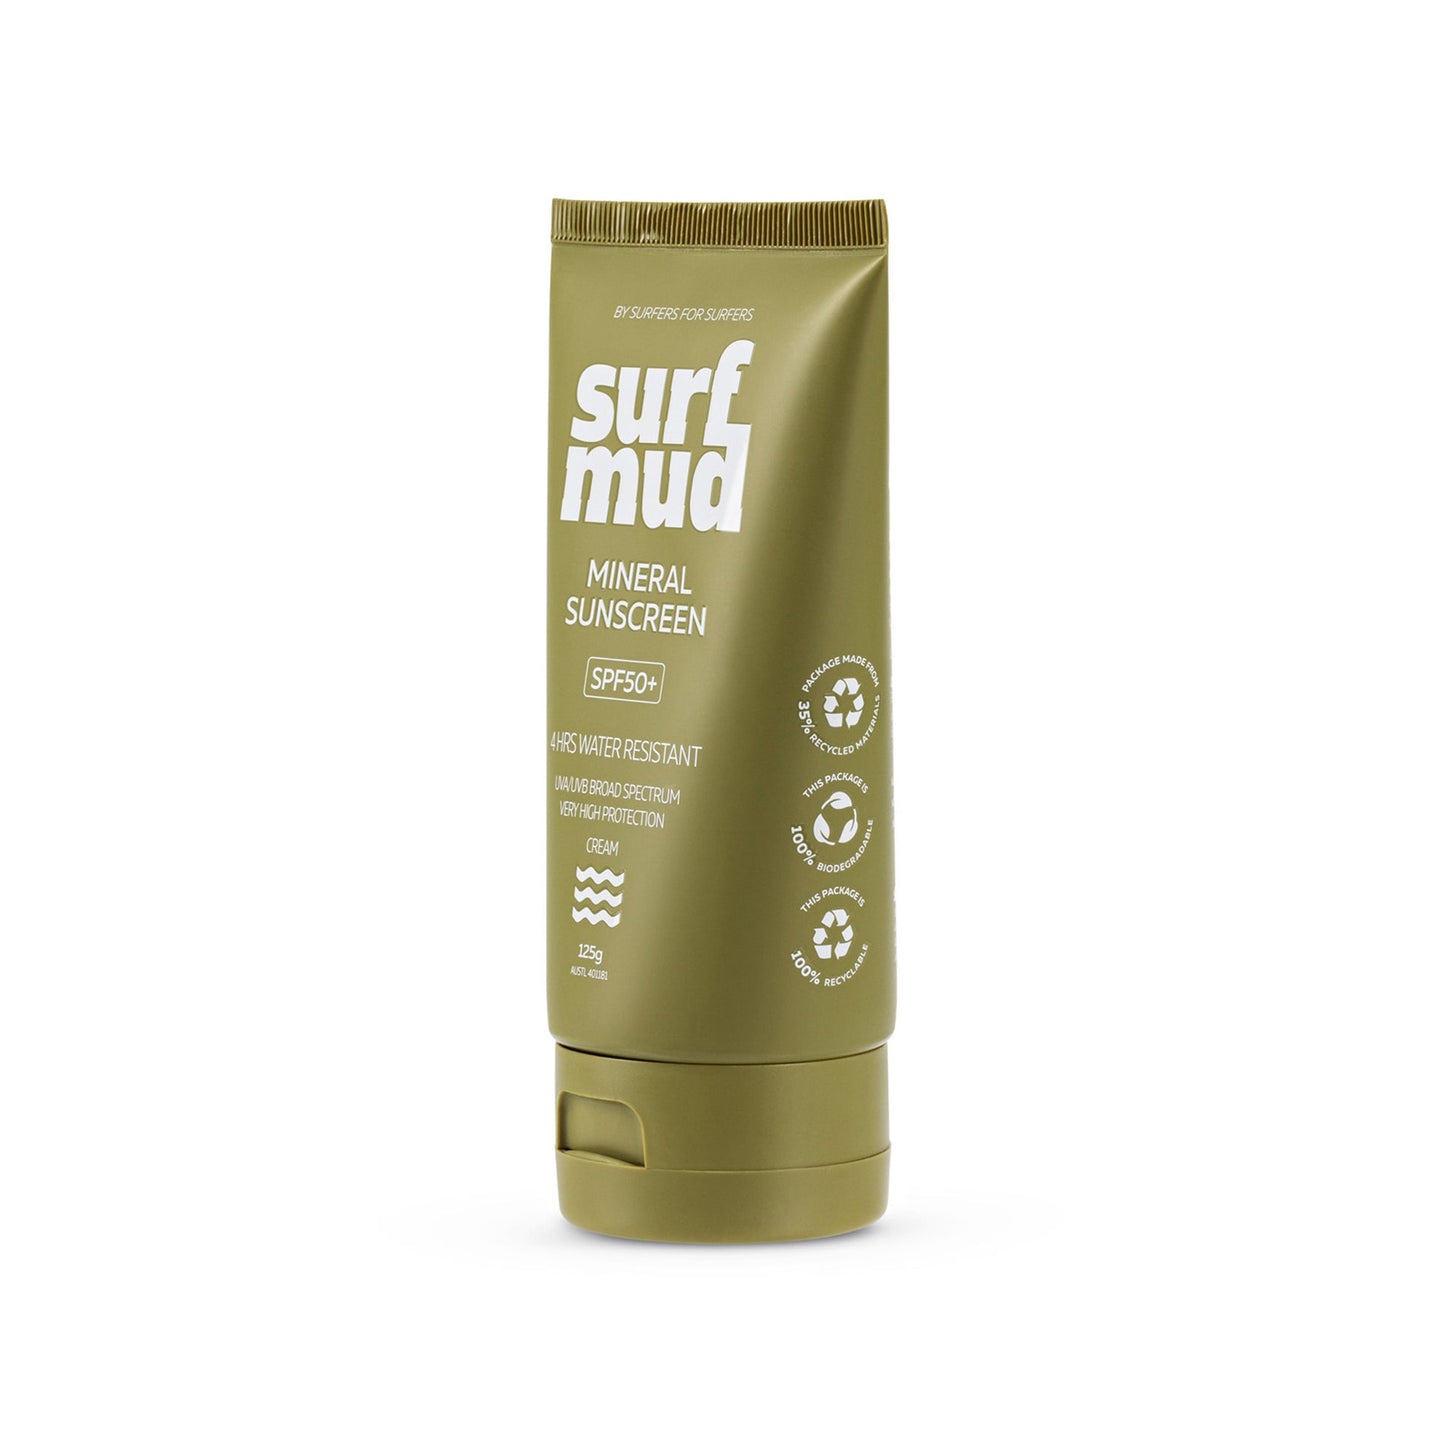 Surfmud Mineral Sunscreen 50g Or 125g, SPF50+